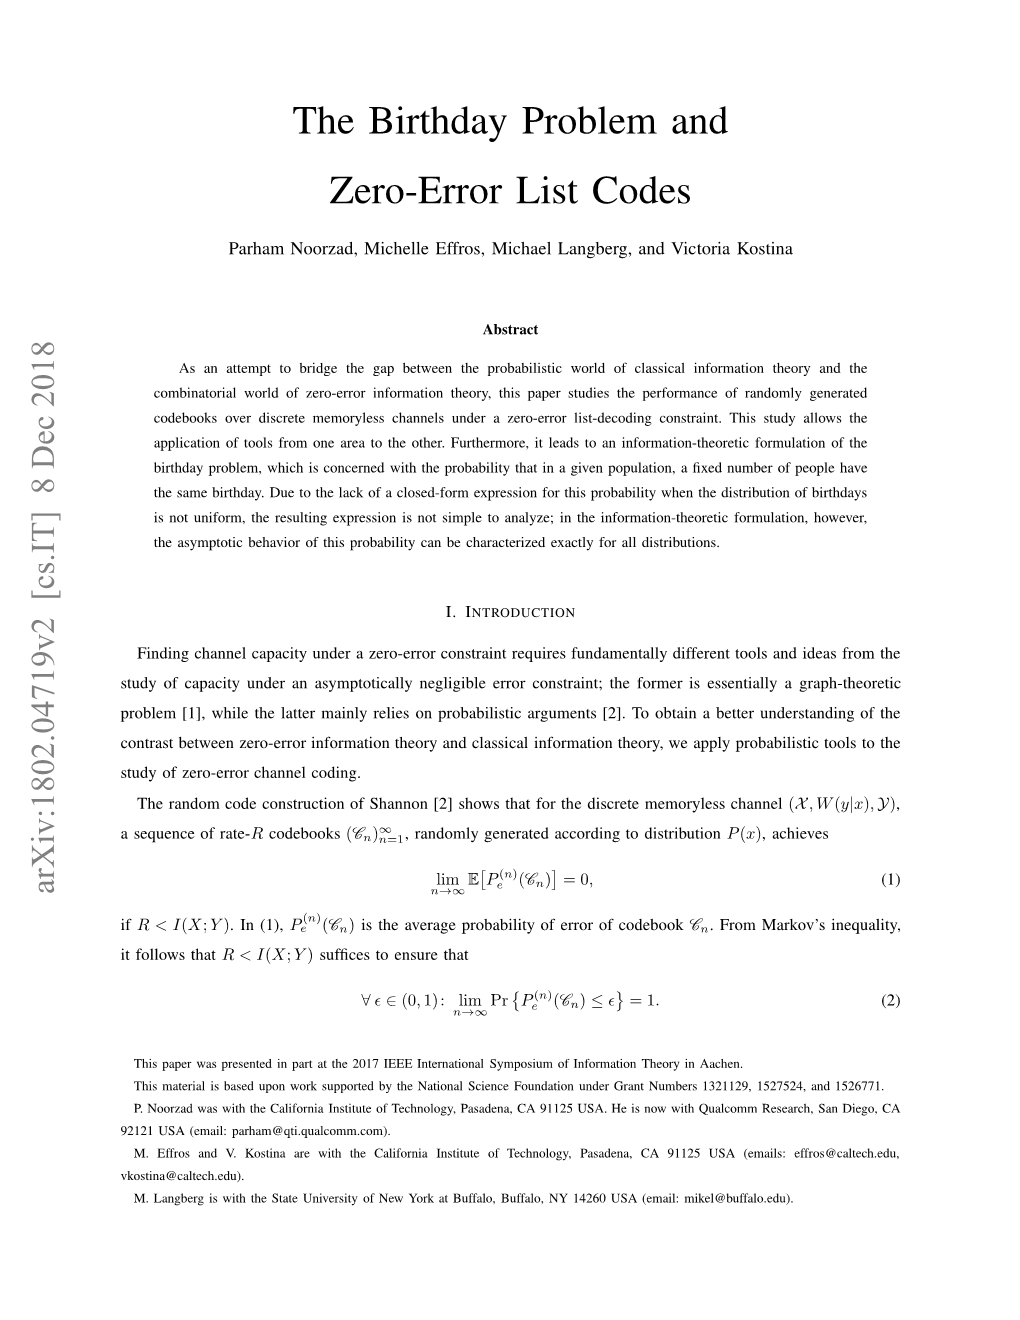 The Birthday Problem and Zero-Error List Codes